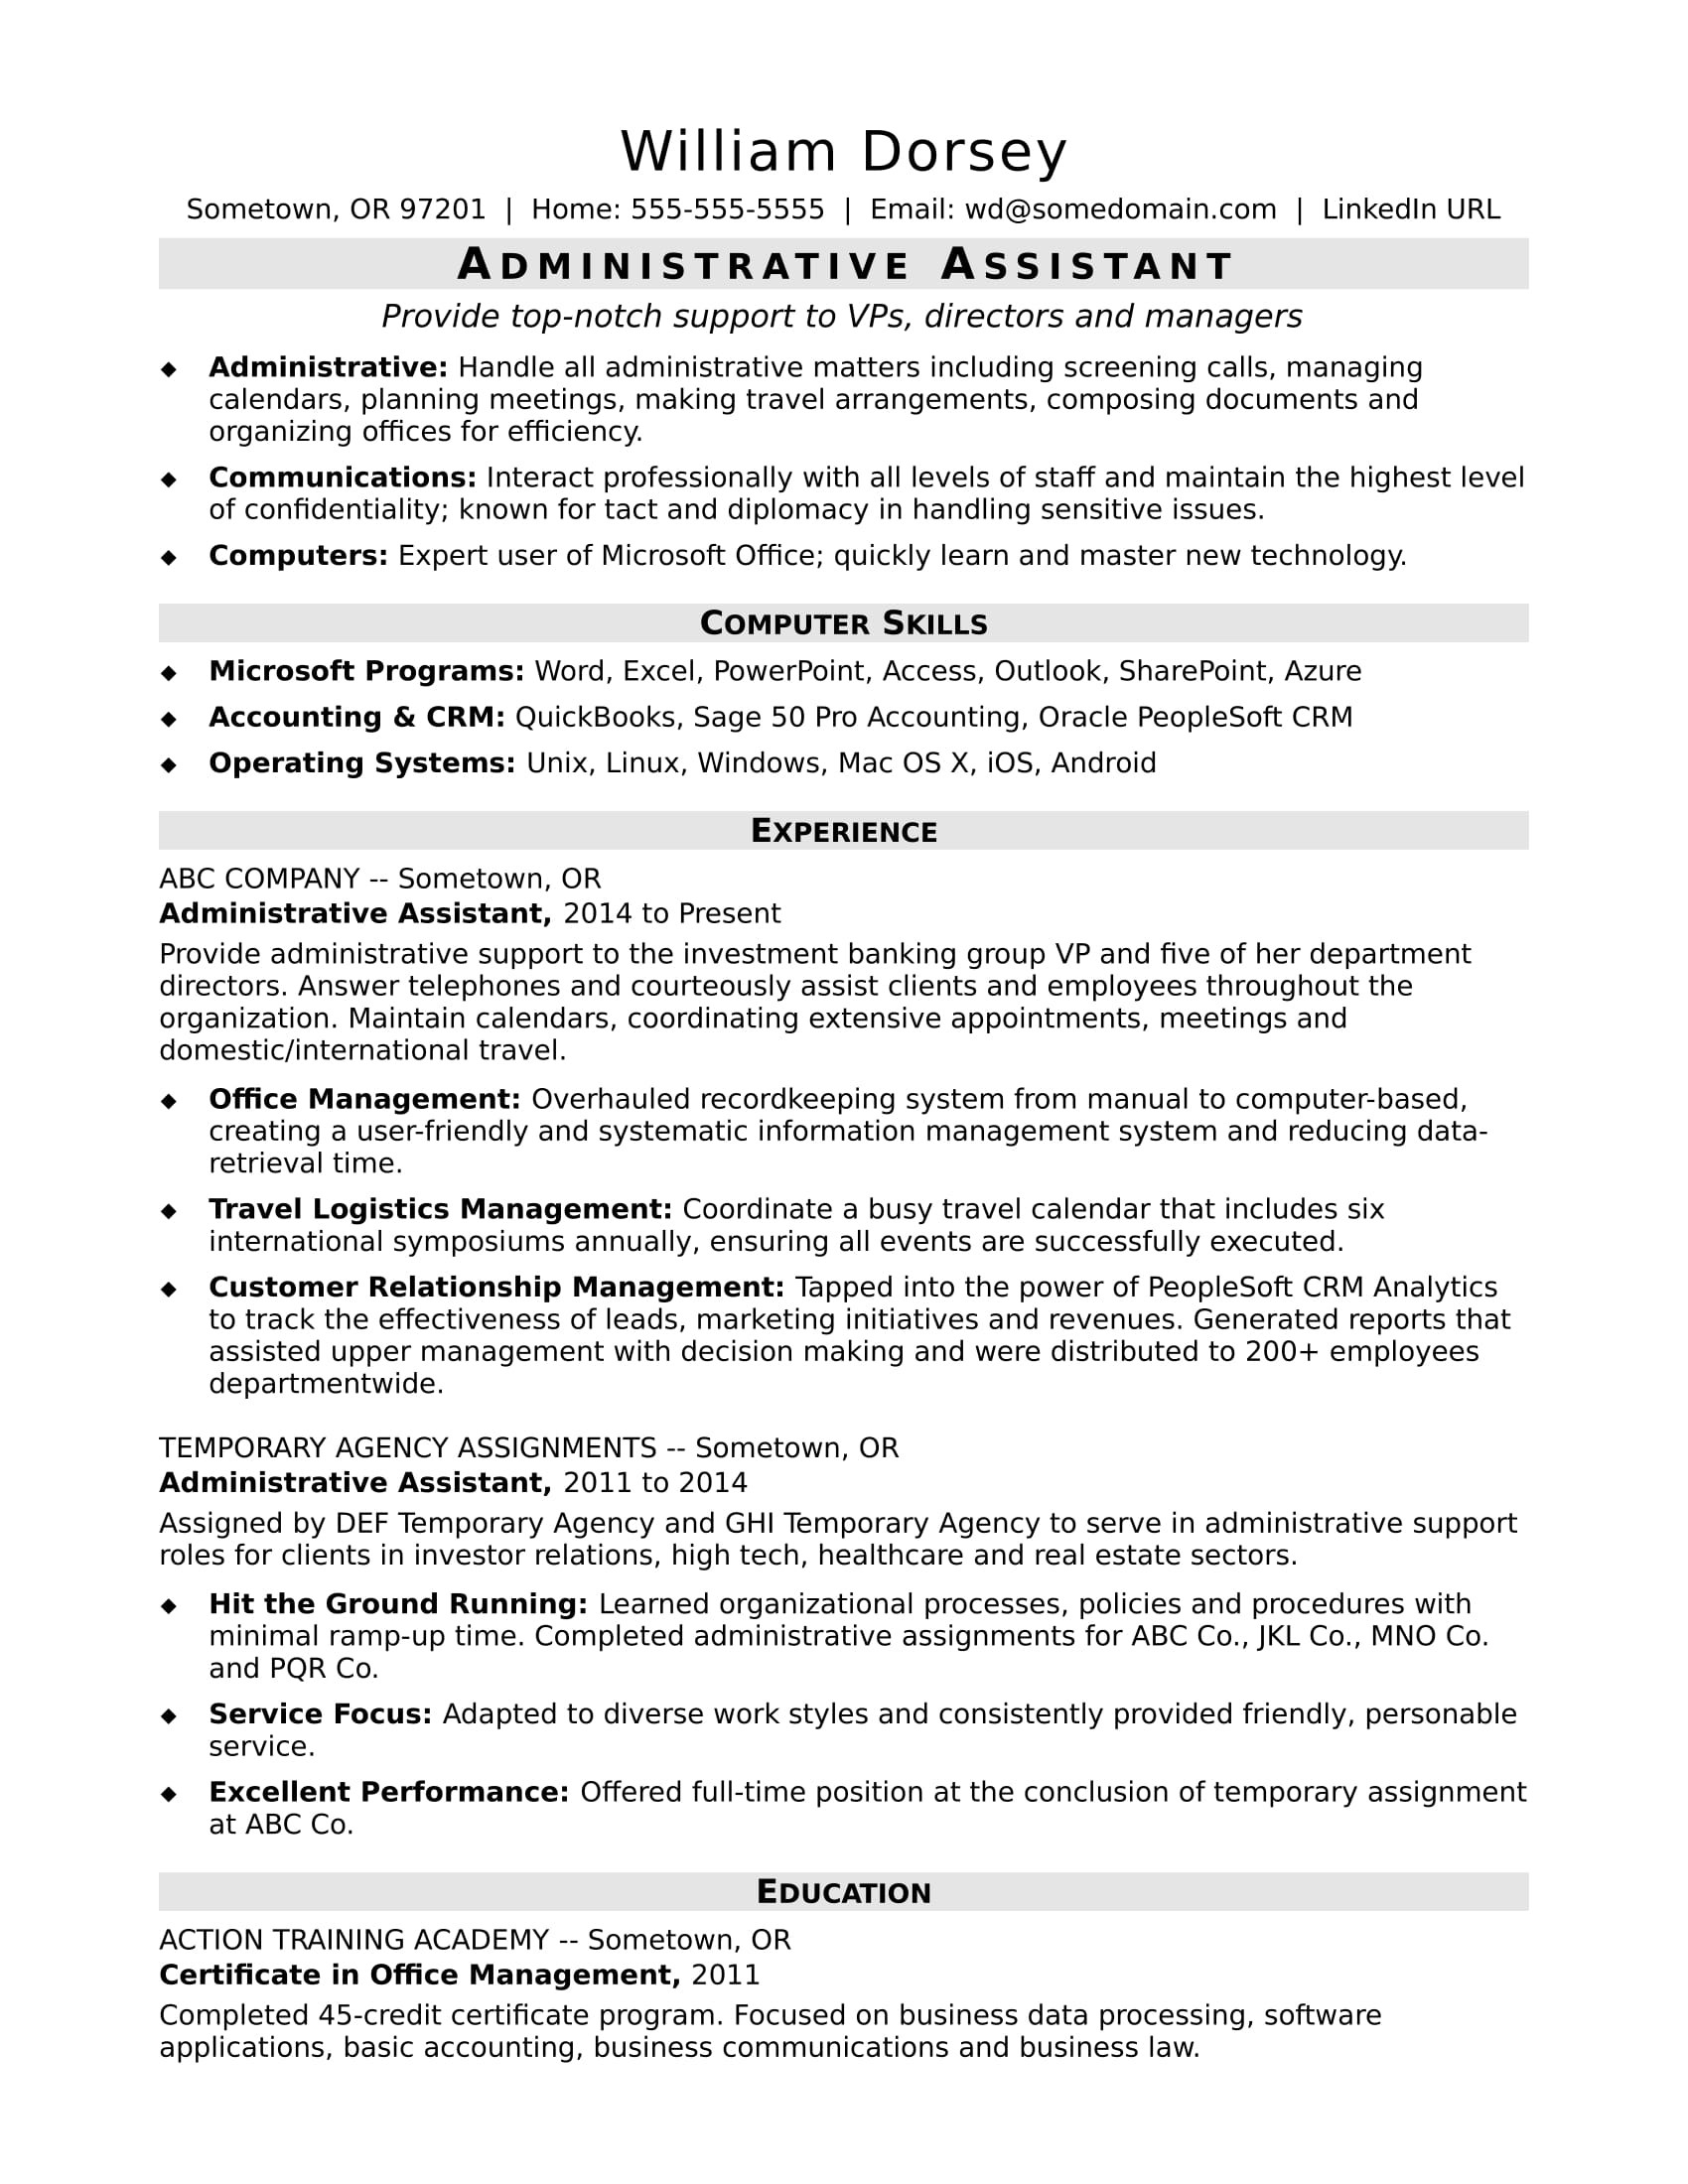 Good Resume Sample for Administrative Specialist Position Administrative assistant Resume Sample Monster.com